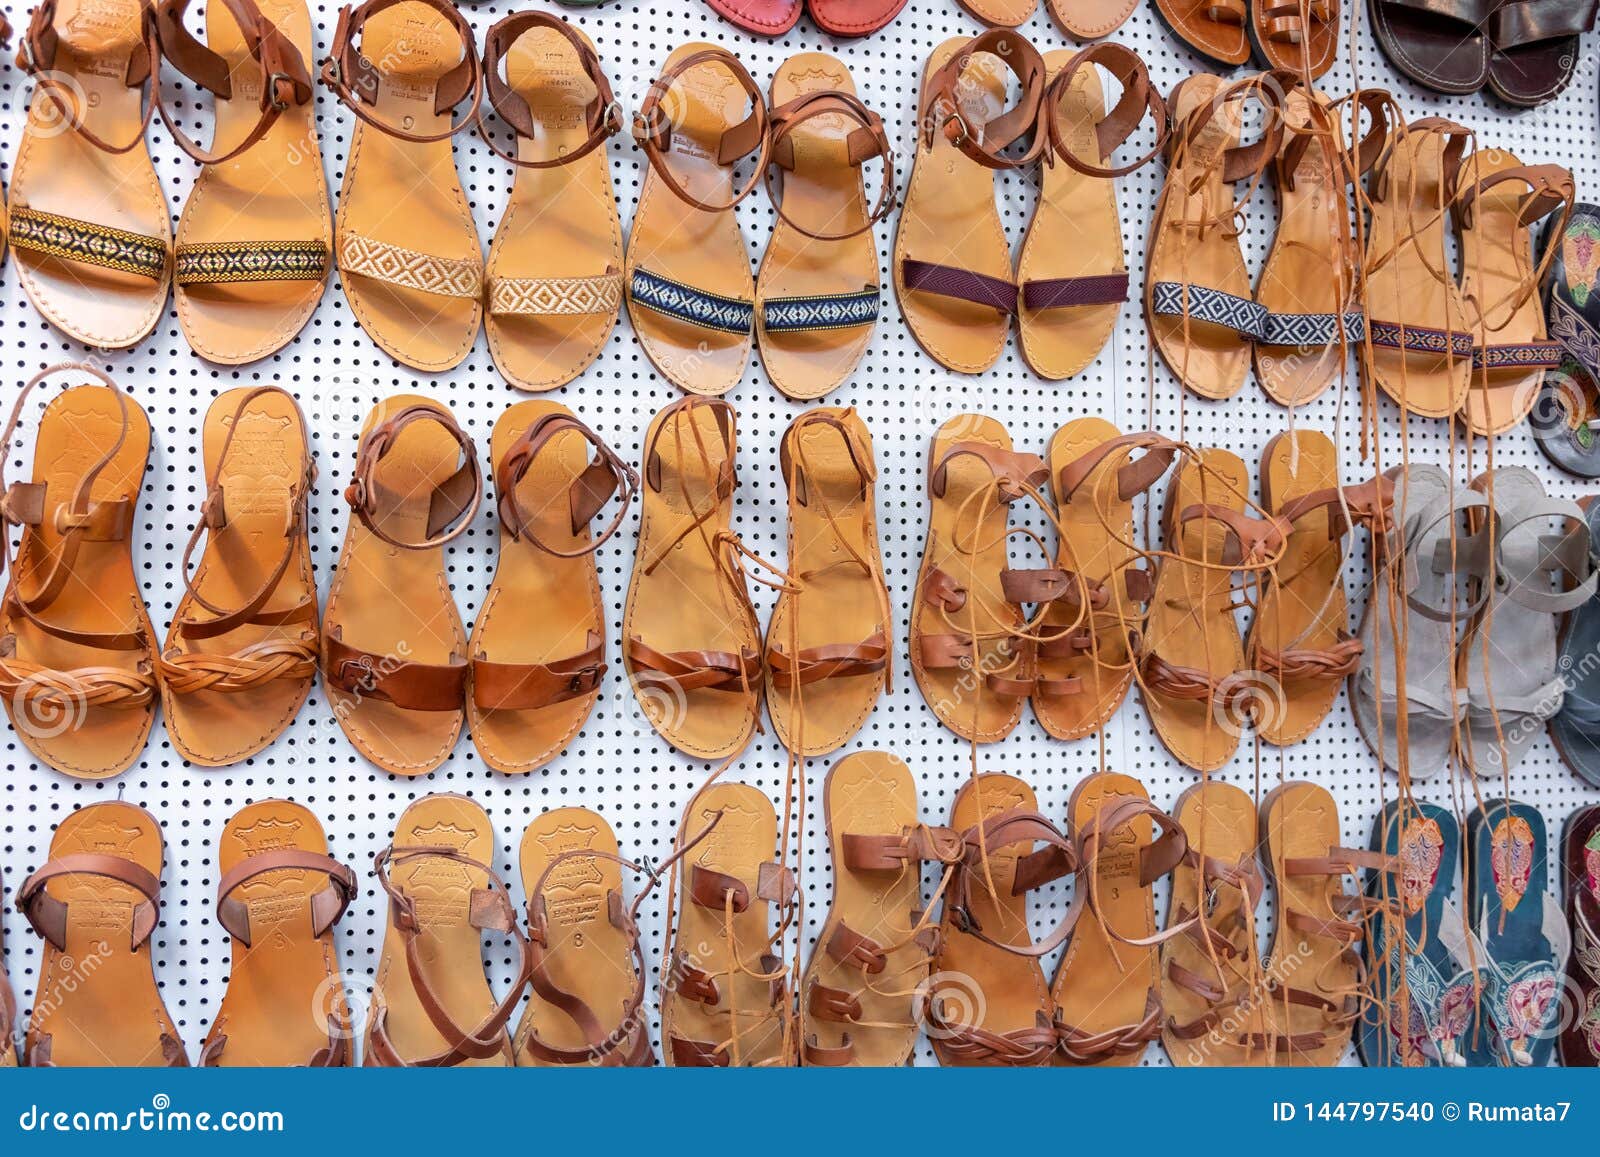 jerusalem leather sandals